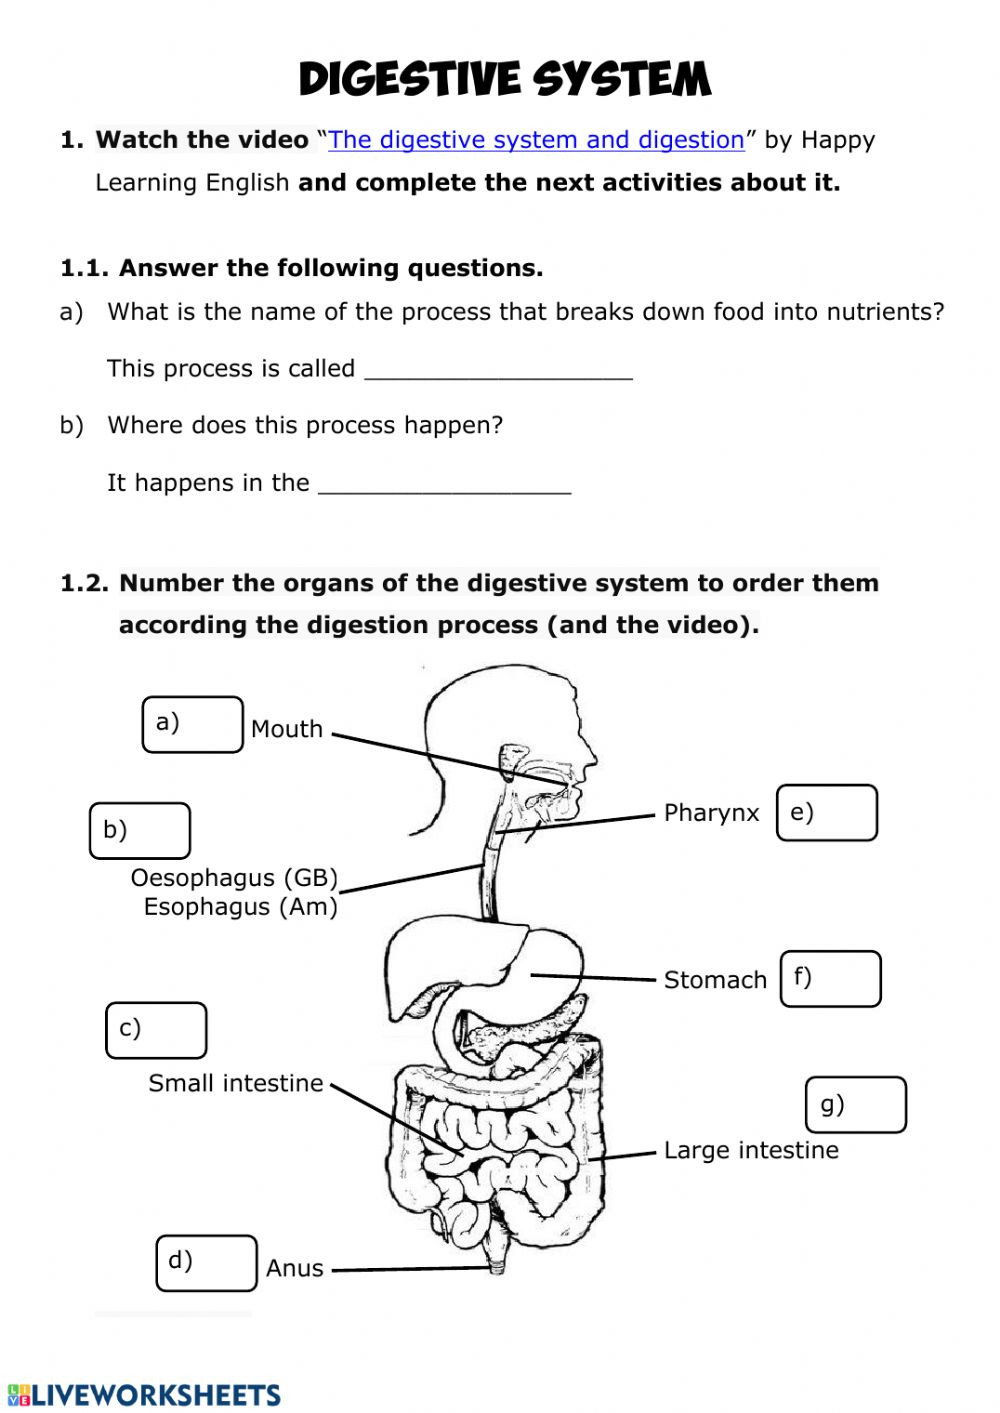 Digestive System Worksheet Answer Key Nutrition 2 Digestive System Interactive Worksheet